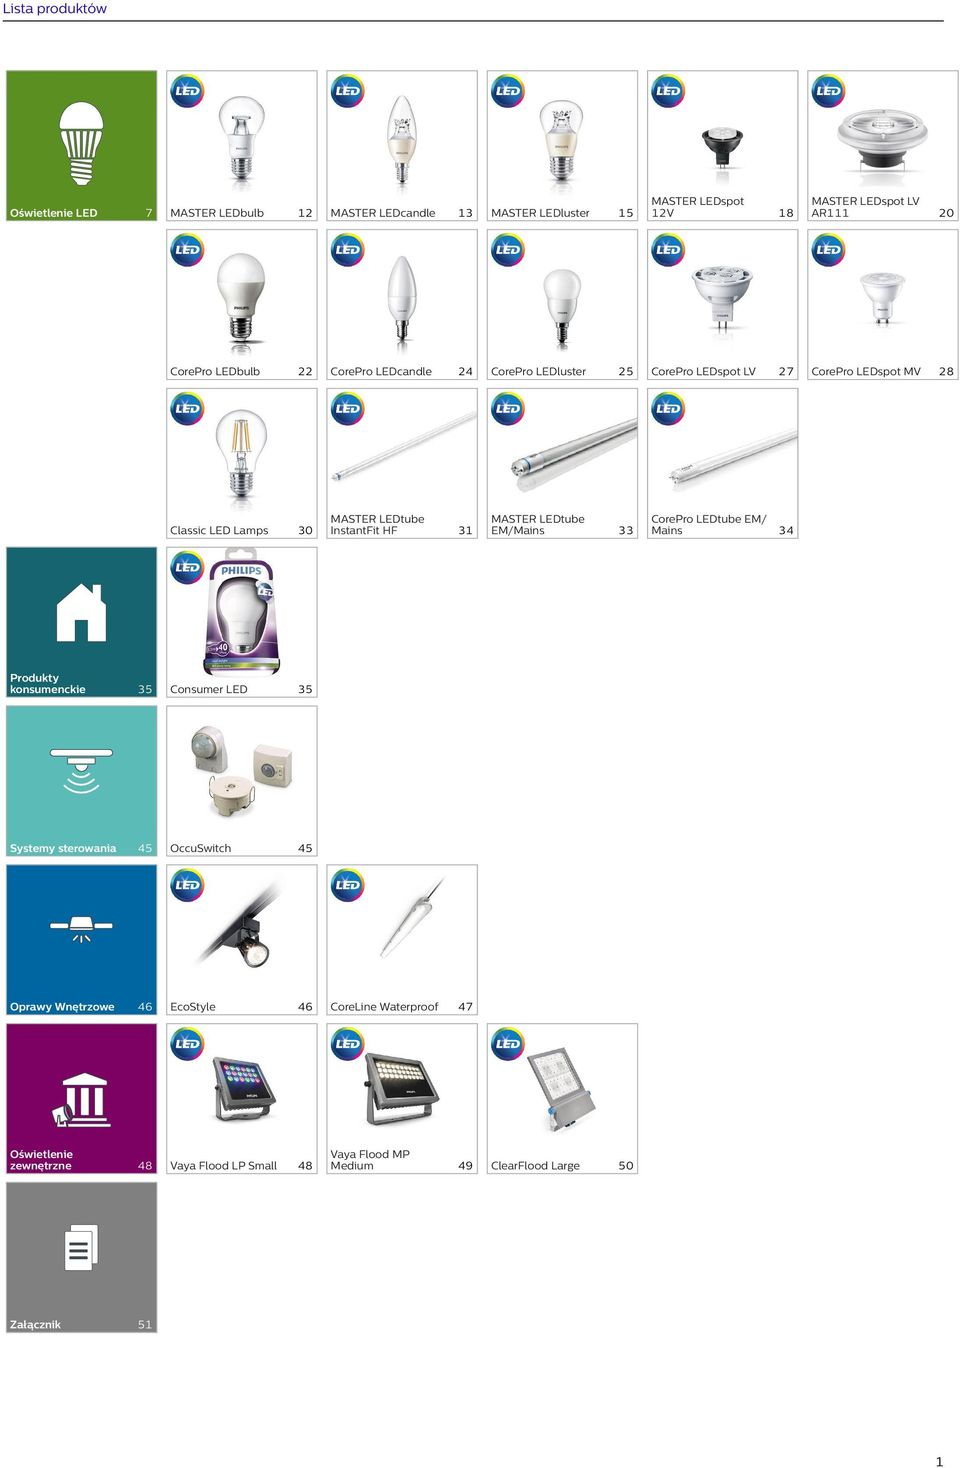 LE Lamps 30 InstantFit HF 31 EM/Mains 33 Mains 34 Produkty konsumenckie 35 onsumer LE 35 Systemy sterowania 45 OccuSwitch 45 Oprawy Wnętrzowe